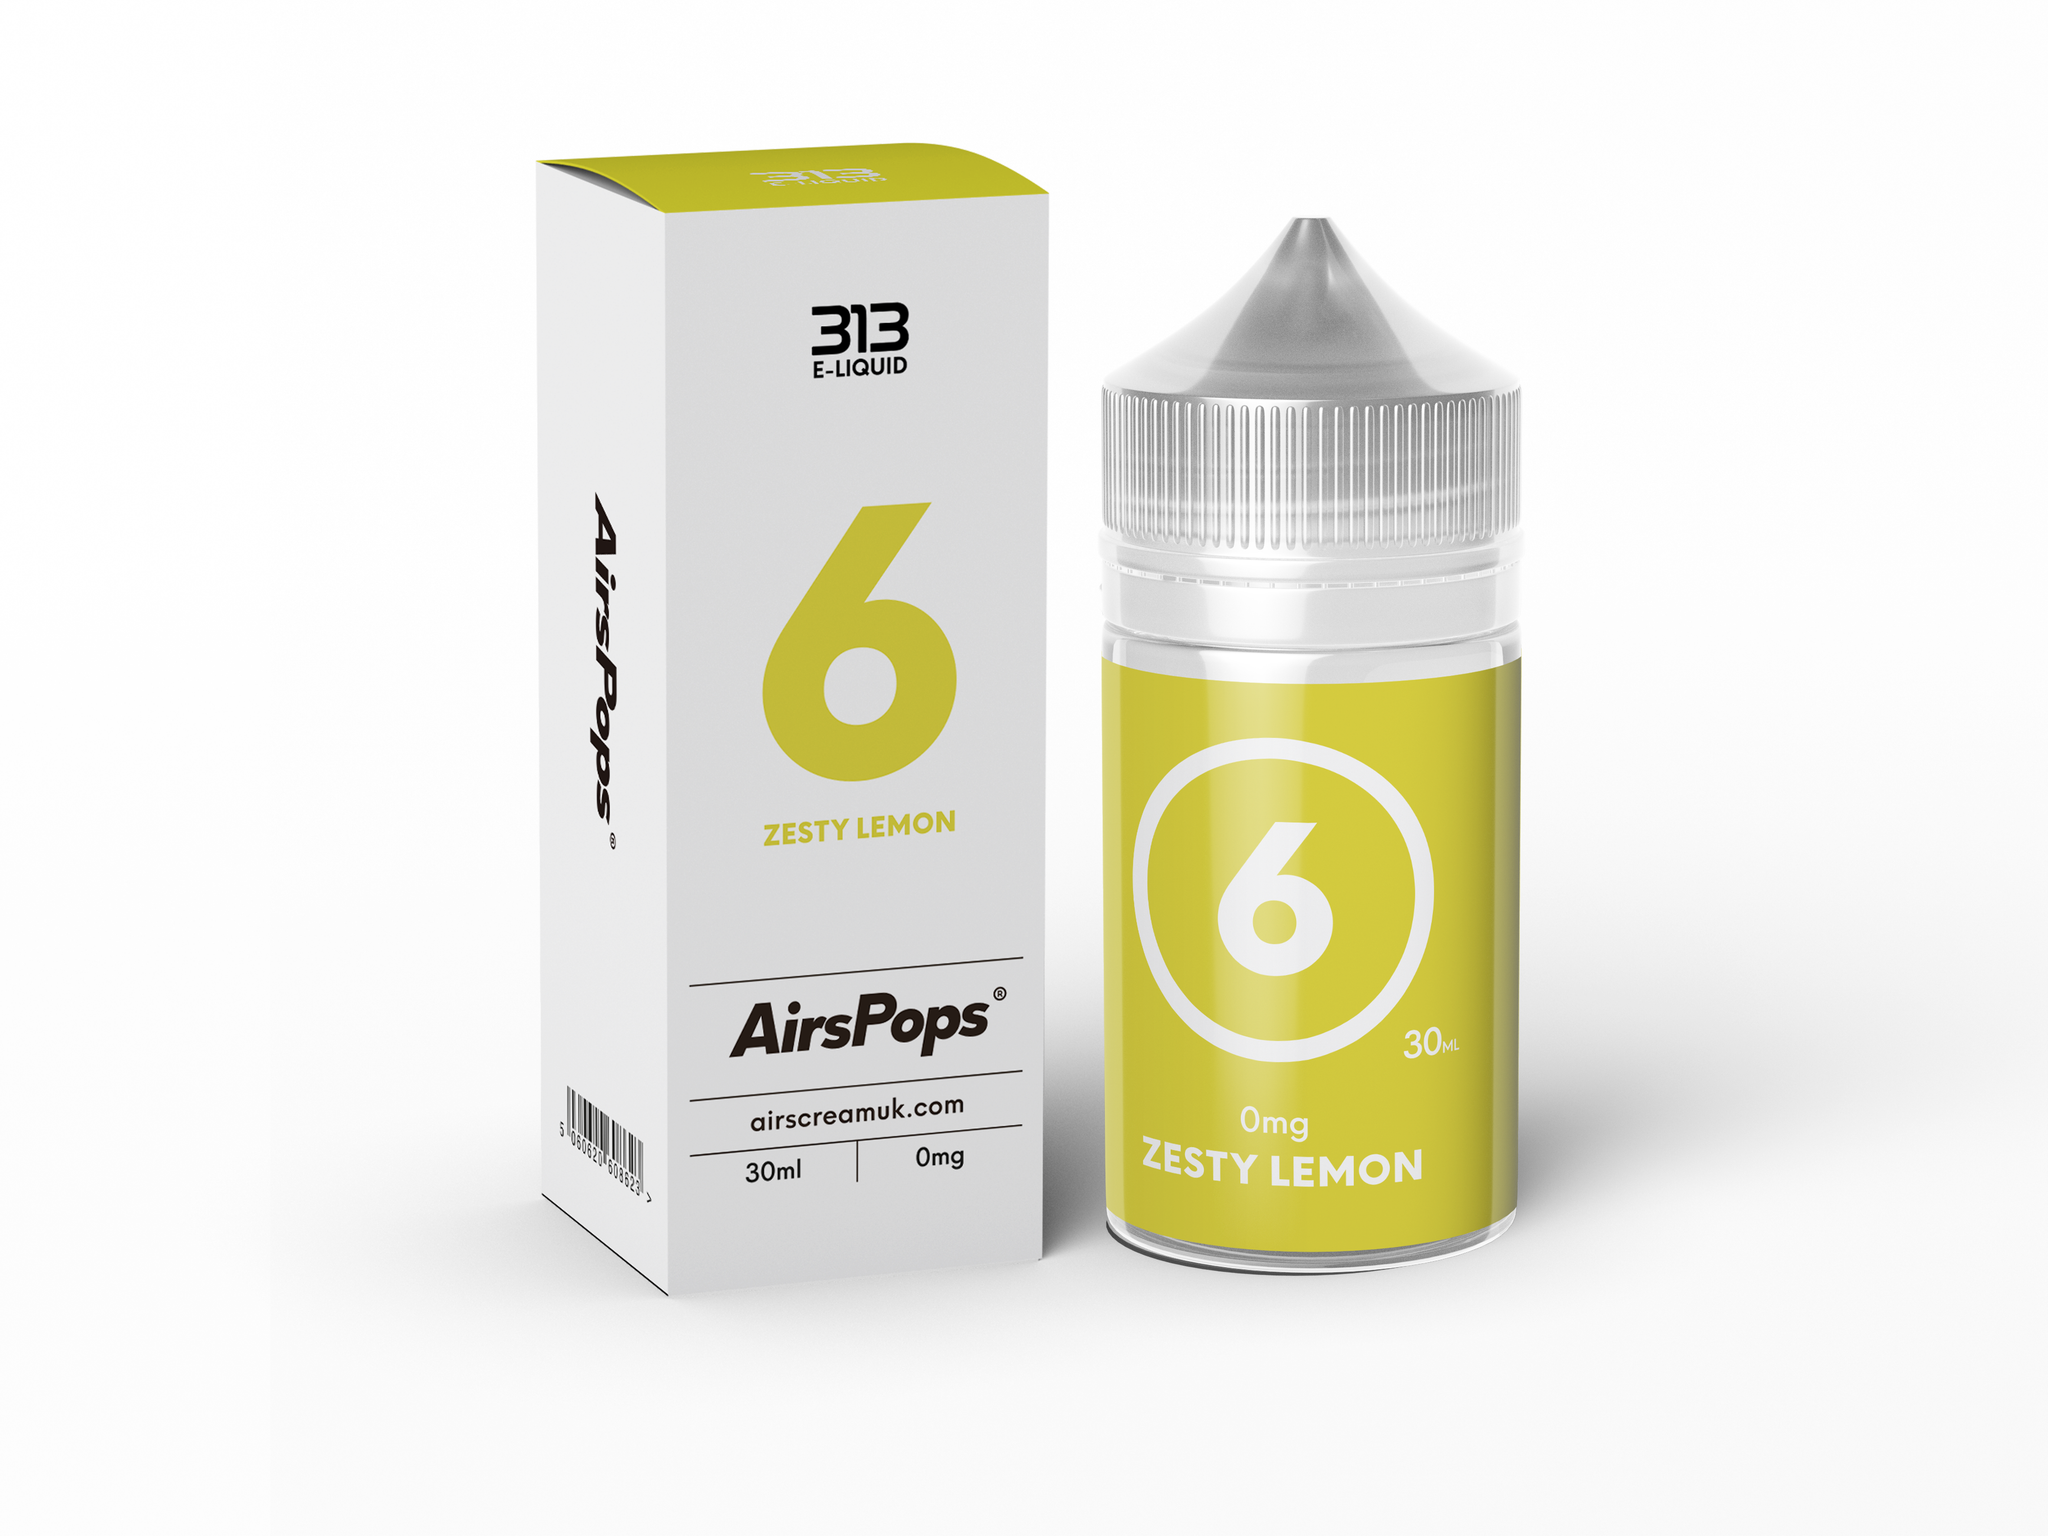 Zesty Lemon by Airscream Airspops 313 30ml E-Liquid